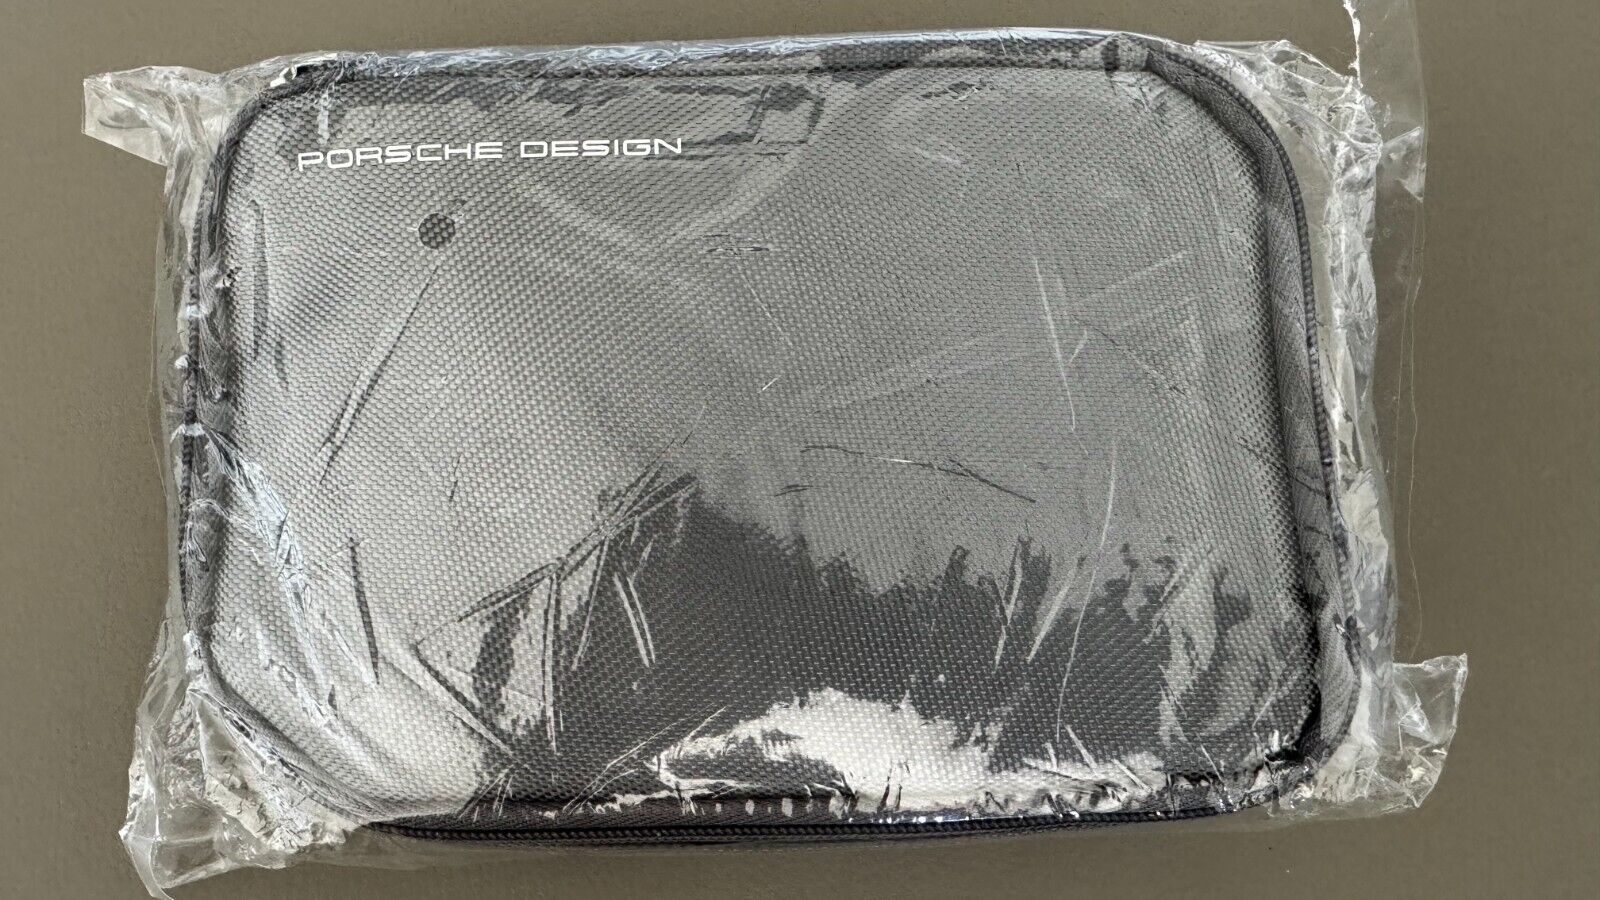 PORSCHE DESIGN First Class Travel Amenity Kit Brand New Sealed